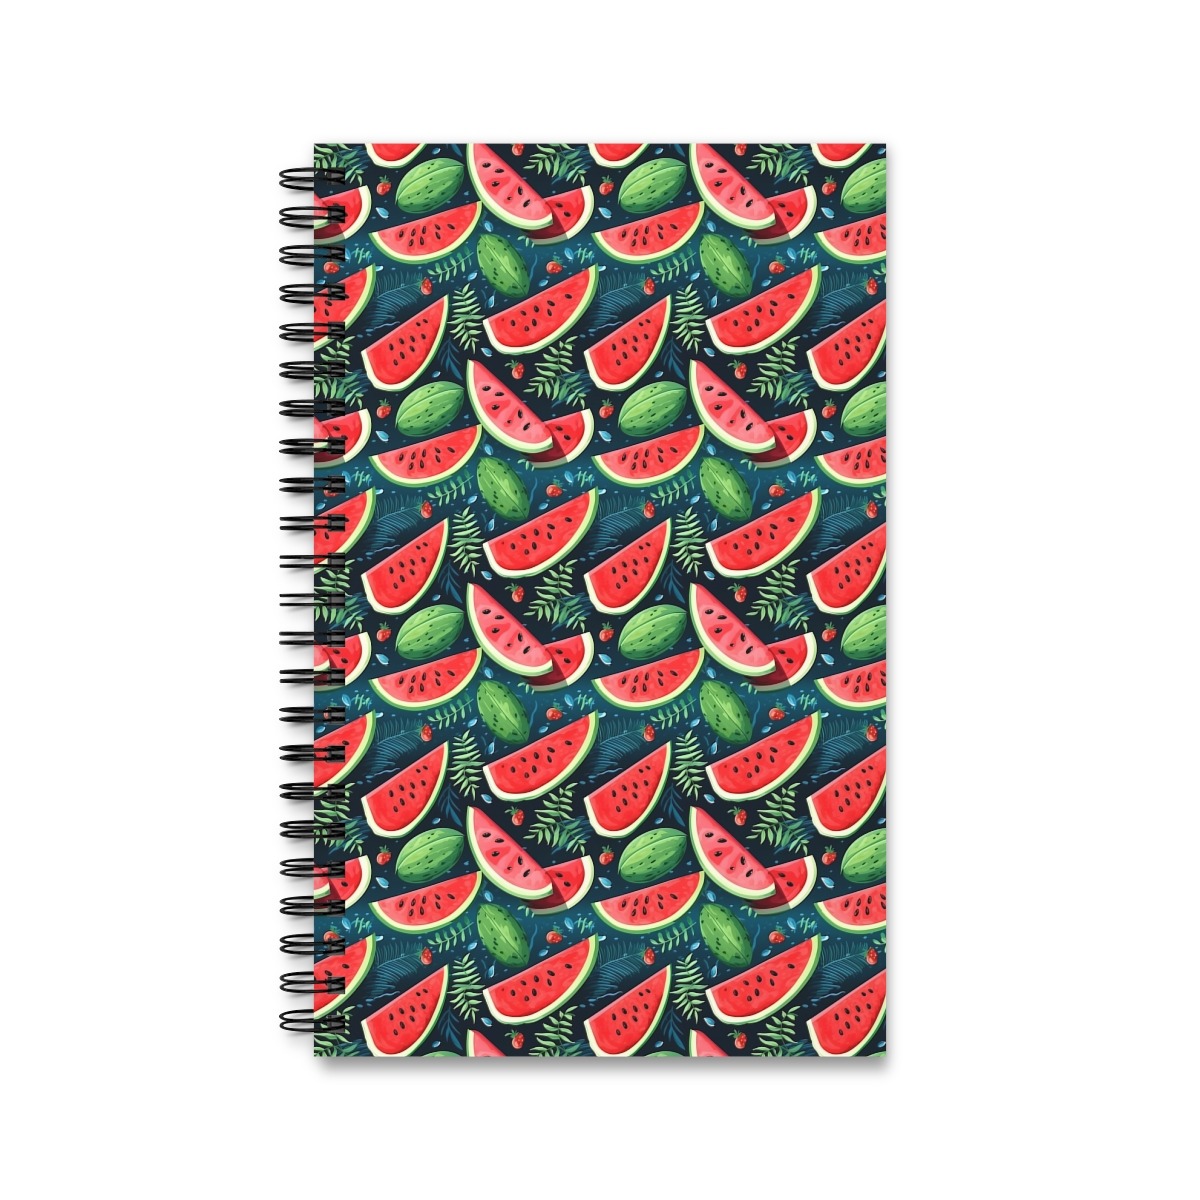 Watercolor Floral Pattern Notebook - Melon, Fern, Monstera - Spiral Binding, Options: Blank, Lined, Dot Grid, Planner